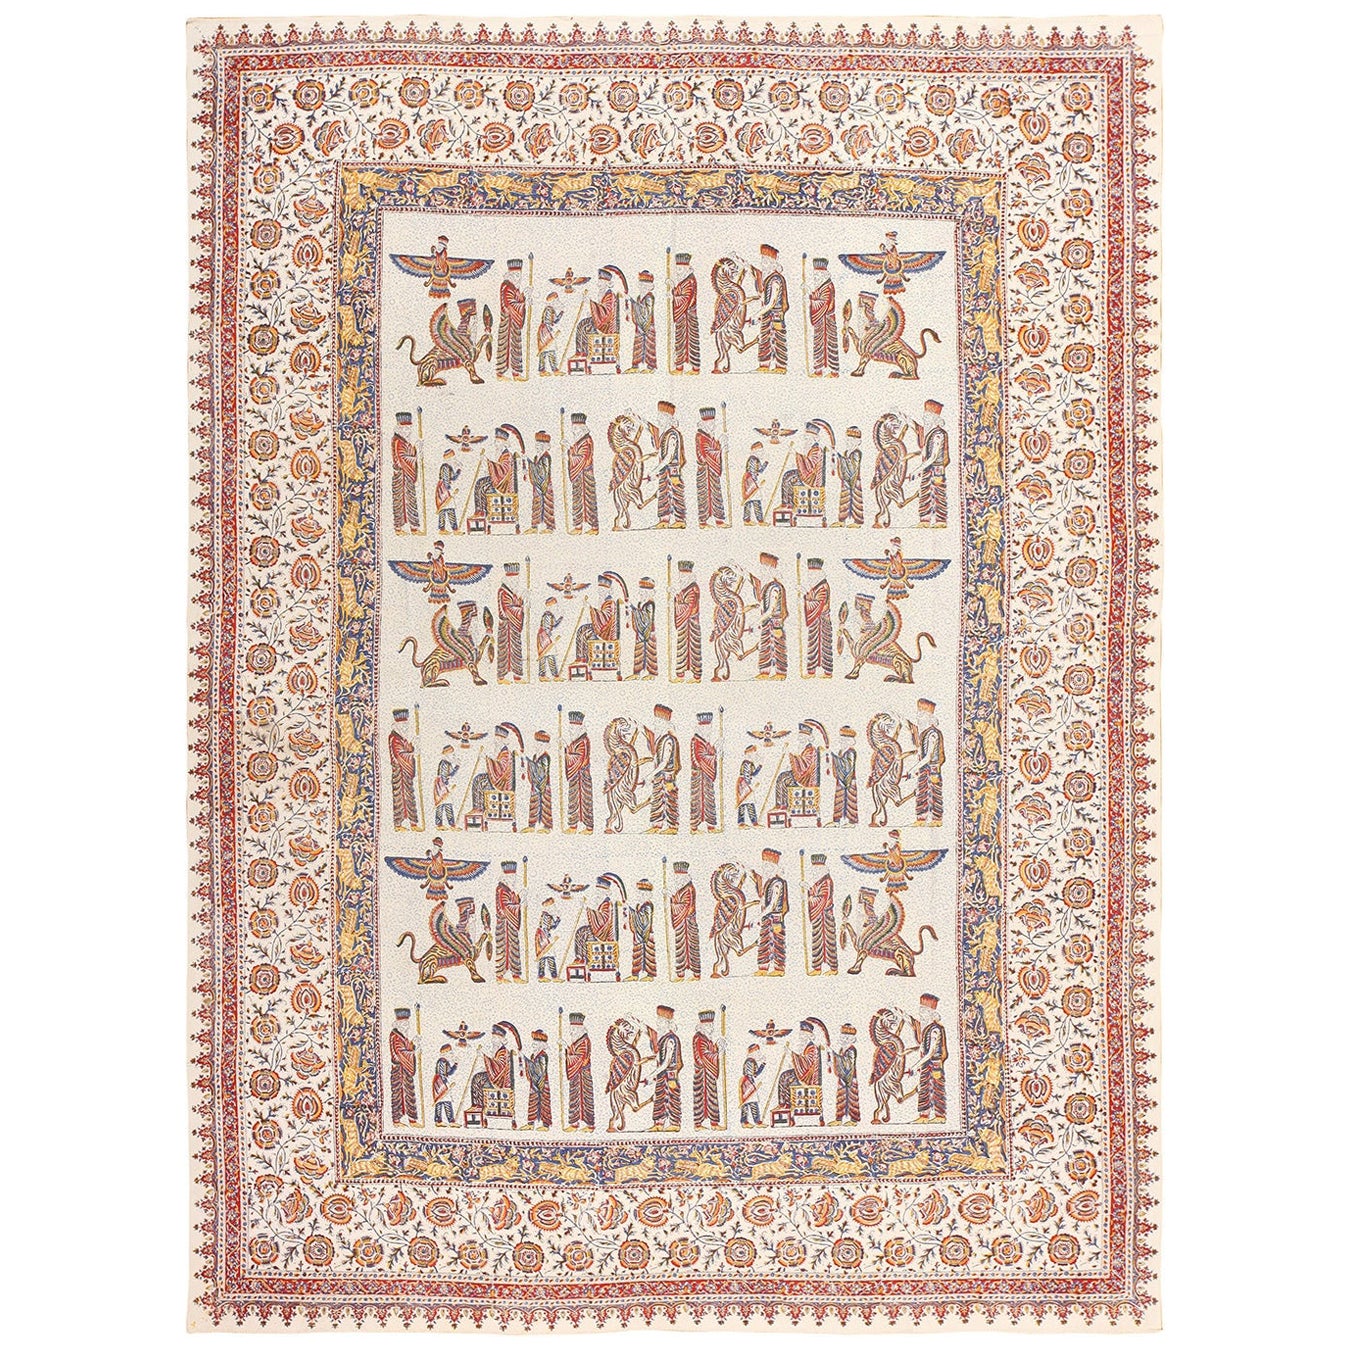 Persepolis Motif Antique Persian Tapestry Textile 6'9" x 9'1"